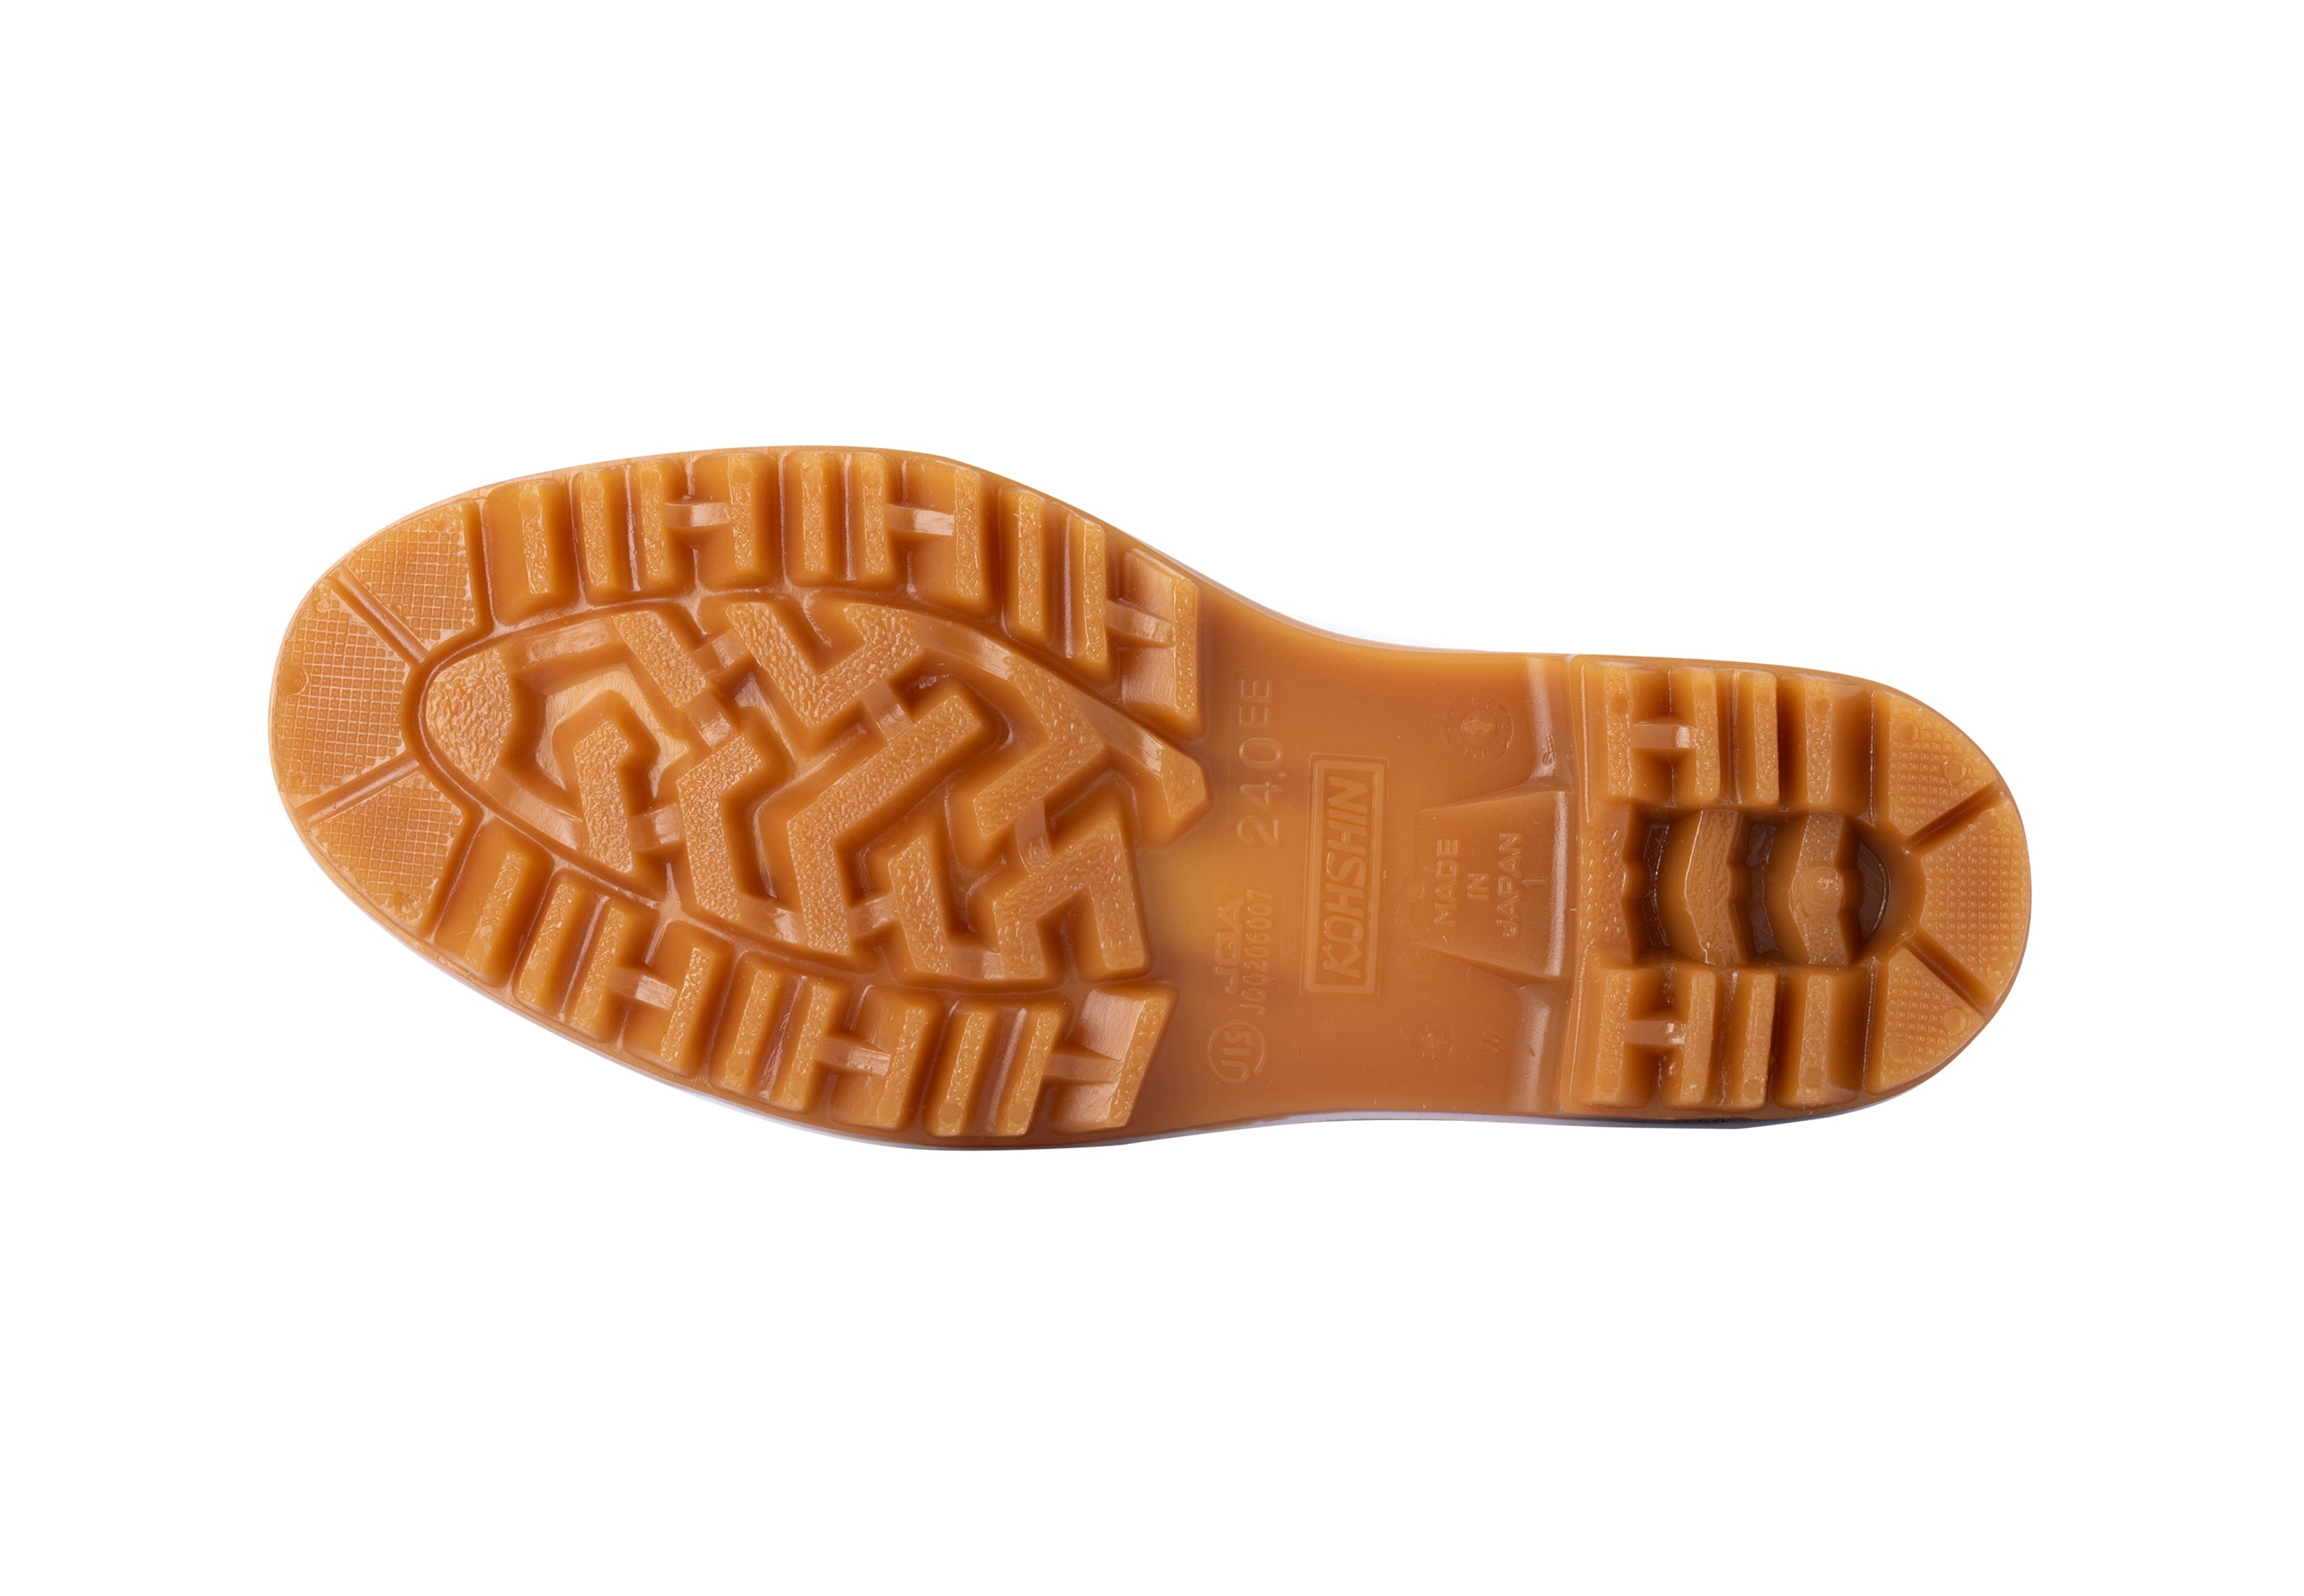 ZONA G3 Labor Boots (Top Sales in Japan)-ZONA (KOHSHIN)-BK-JP/TW Size-1: 225-偉豐鞋 WELL SHOE HK-Well Shoe-偉豐鞋-偉豐網-荃灣鞋店-Functional shoes-Hong Kong Tsuen Wan Shoe Store-Tai Wan Shoe-Japan Shoe-高品質功能鞋-台灣進口鞋-日本進口鞋-High-quality shoes-鞋類配件-荃灣進口鞋-香港鞋店-優質鞋類產品-水靴-帆布鞋-廚師鞋-香港鞋品牌-Hong Kong Shoes brand-長者鞋-Hong Kong Rain Boots-Kitchen shoes-Cruthes-Slipper-Well Shoe Hong Kong-Anello-Arriba-休閒鞋-舒適鞋-健康鞋-皮鞋-Healthy shoes-Leather shoes-Hiking shoes